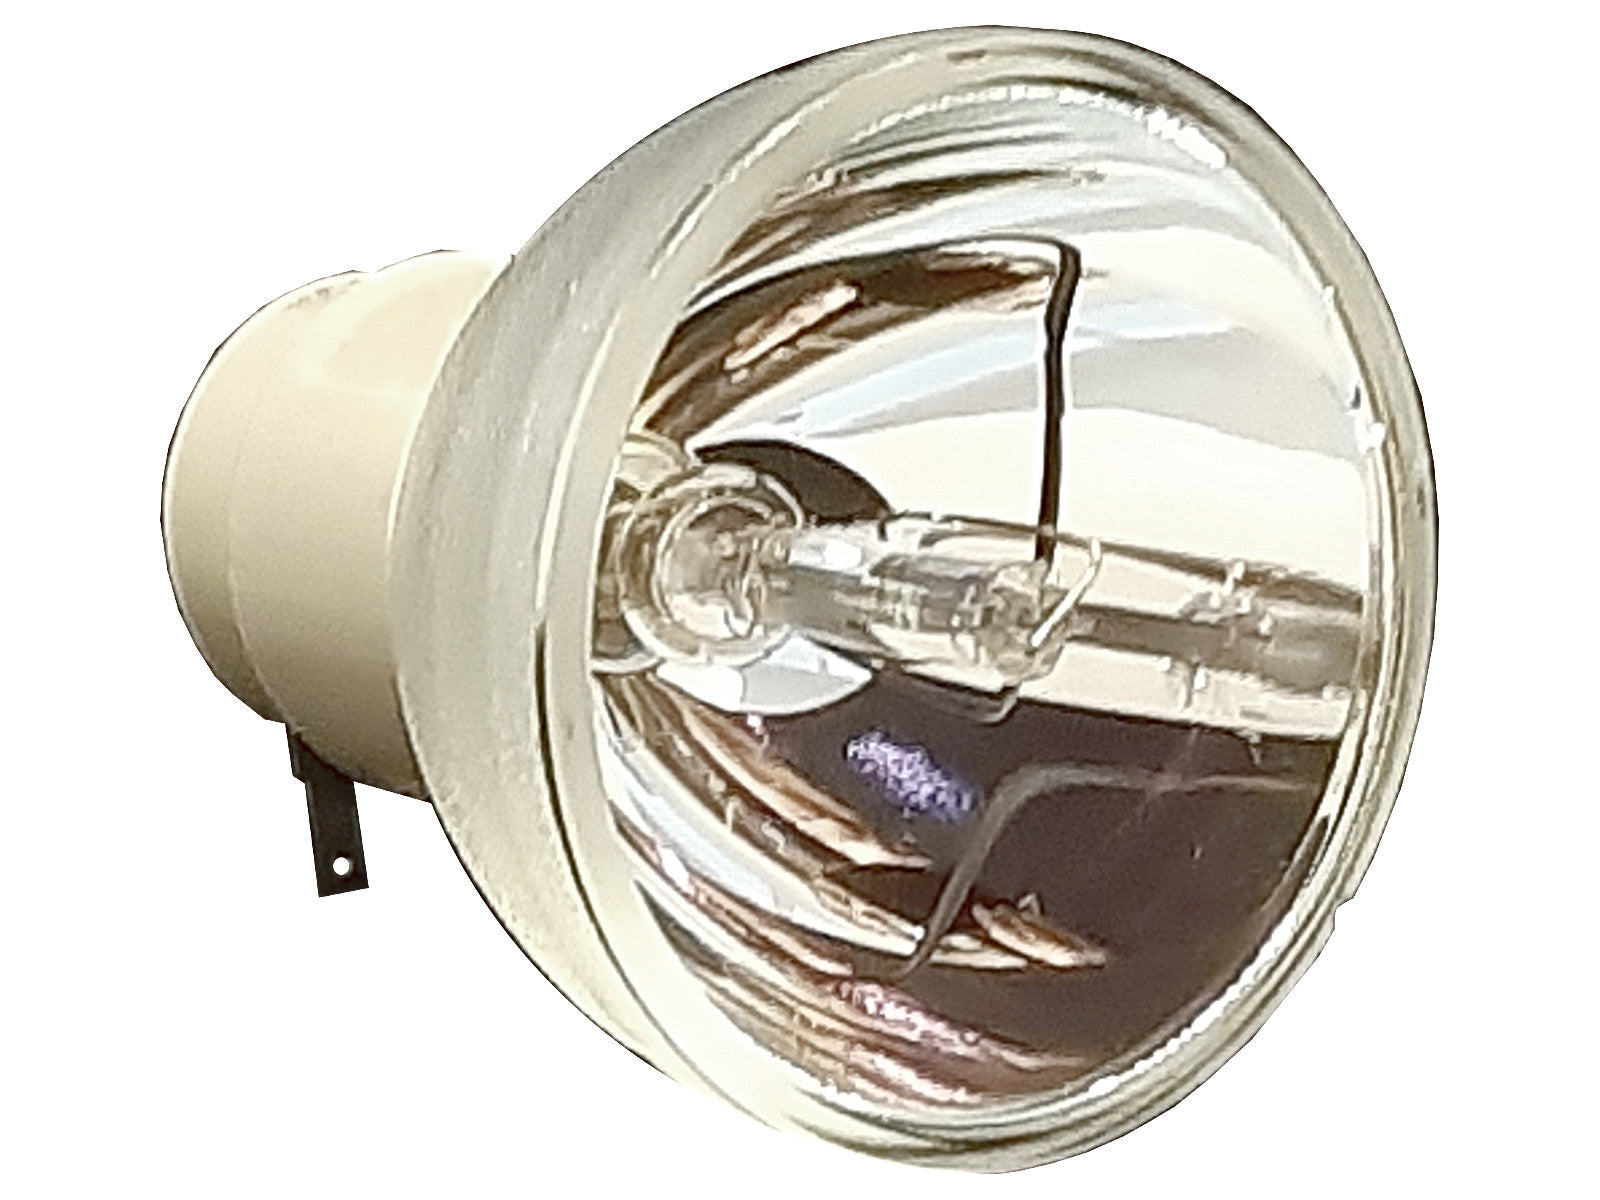 OSRAM Beamerlampe P-VIP 285/0.9 E20.9 HE für diverse Projektoren - Bild 1